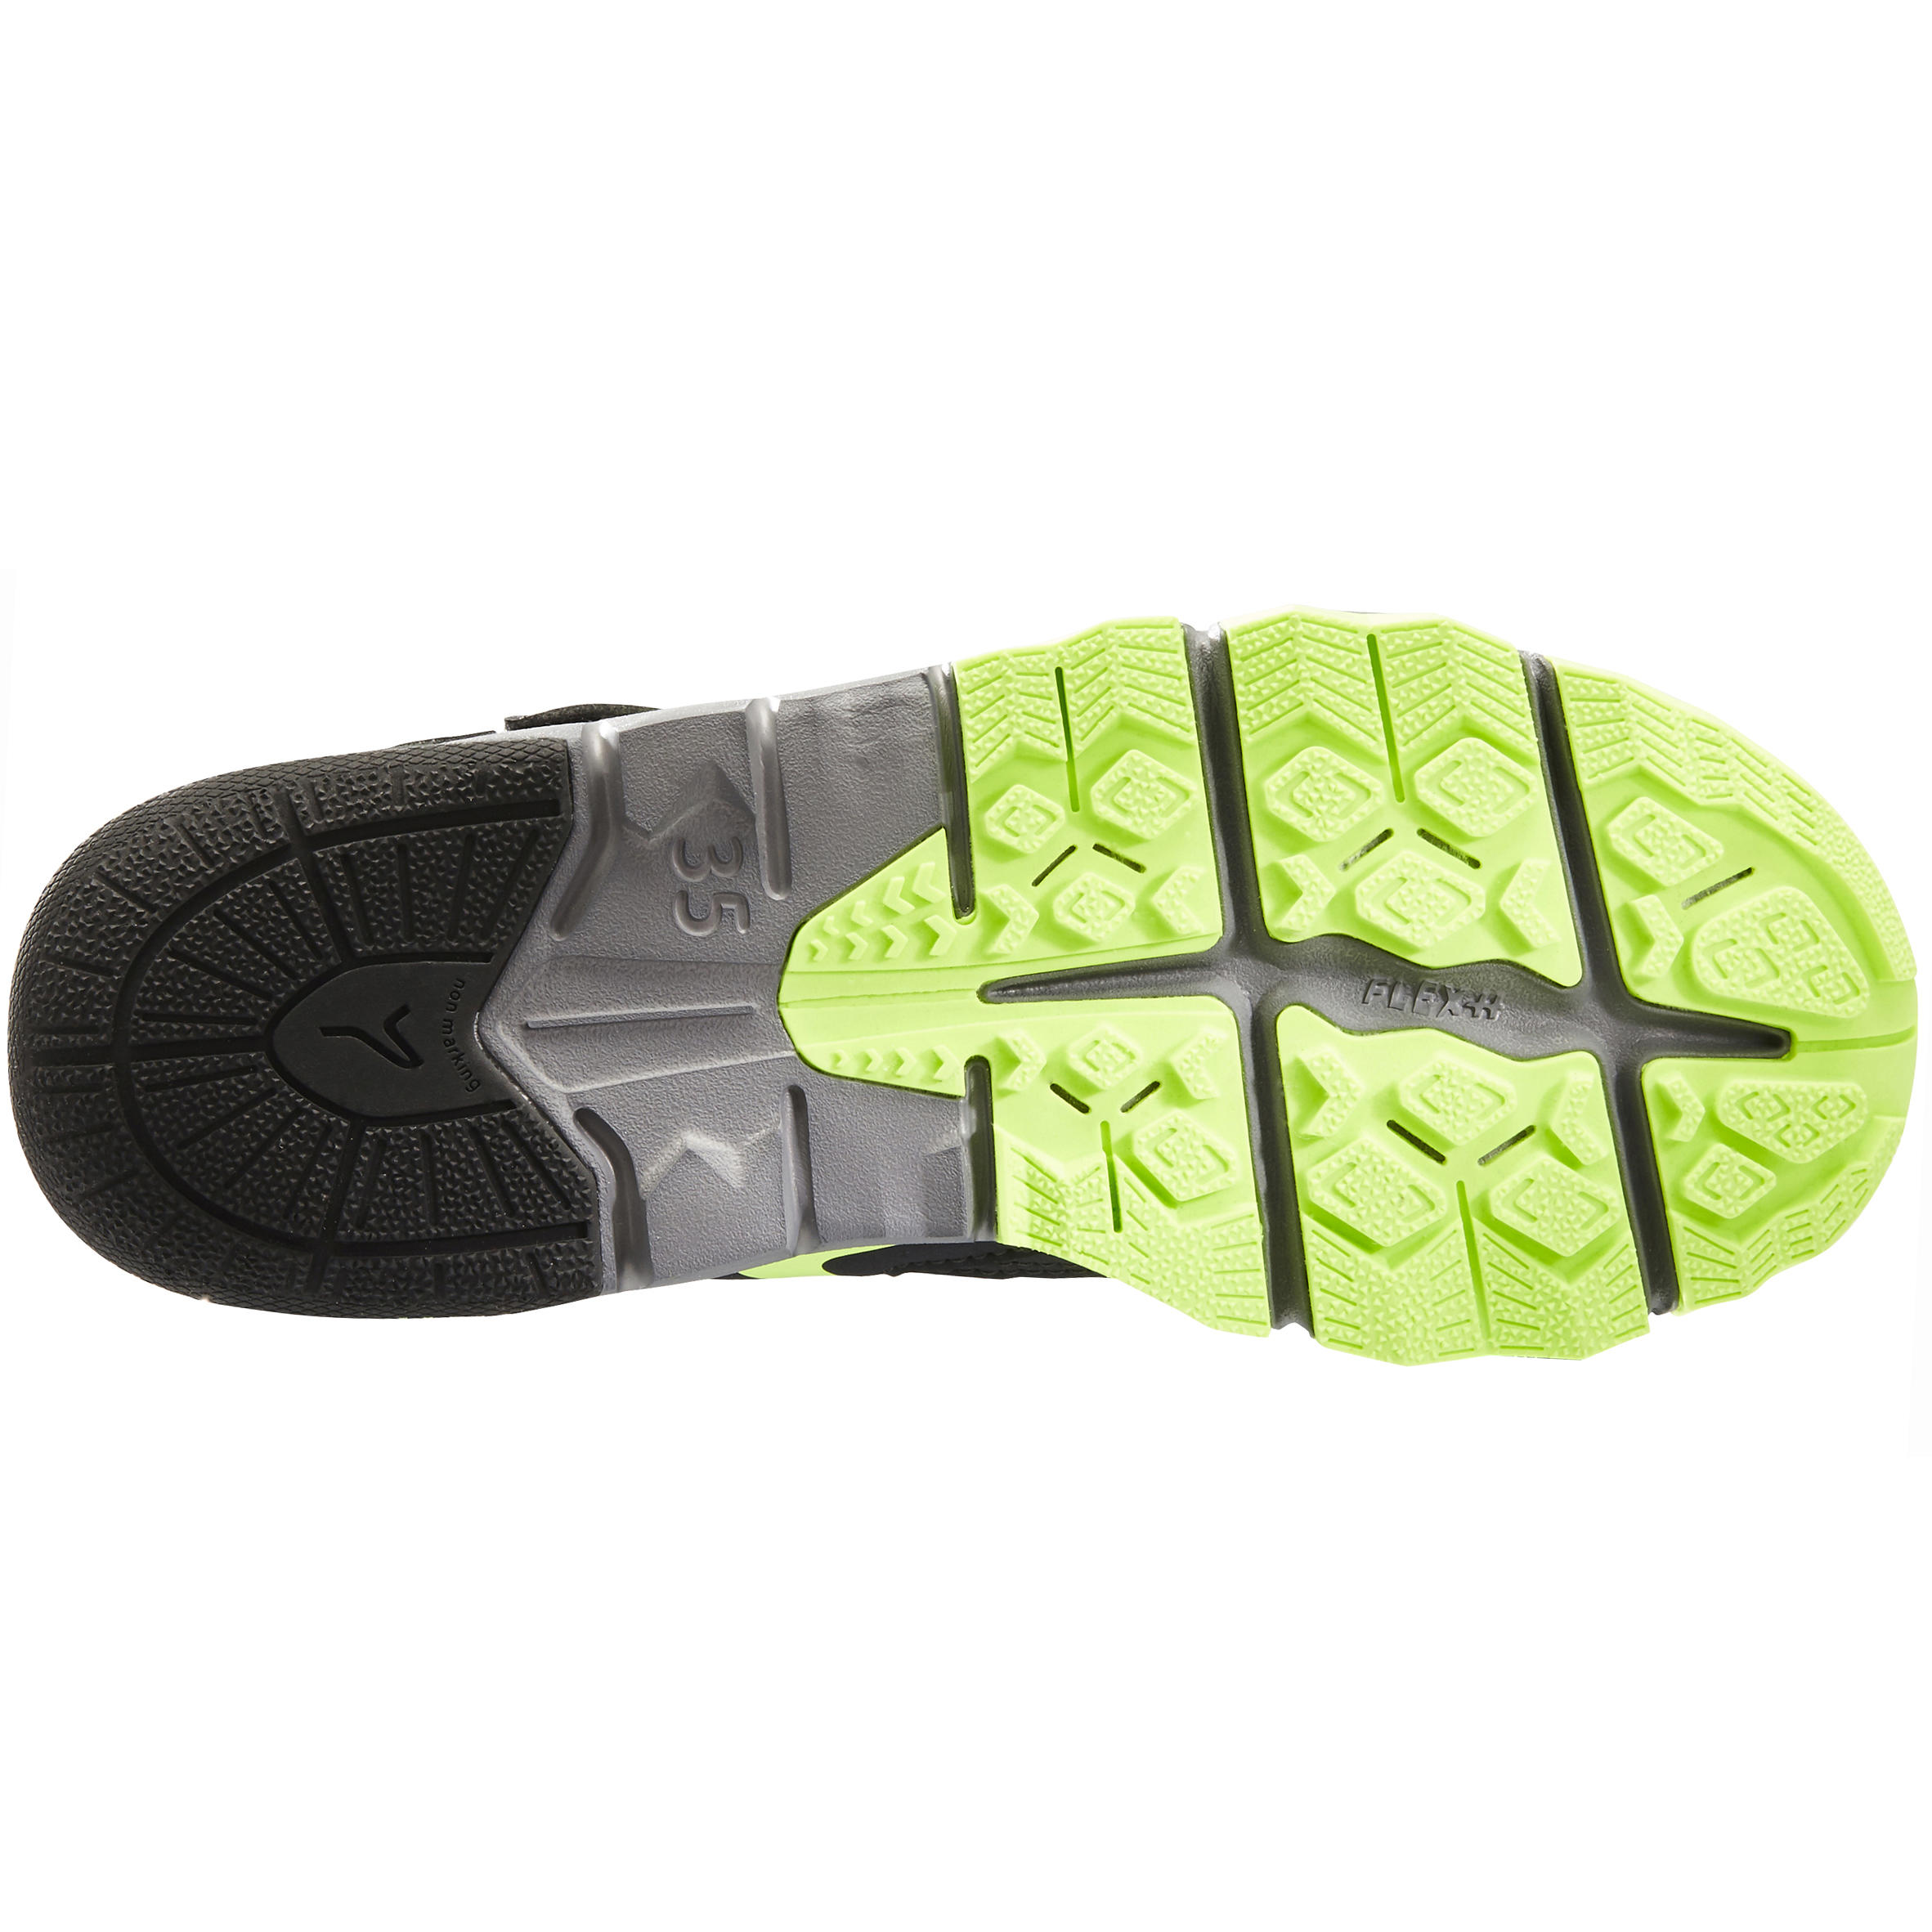 NW 580 Children's Nordic Walking Shoes grey green 6/11